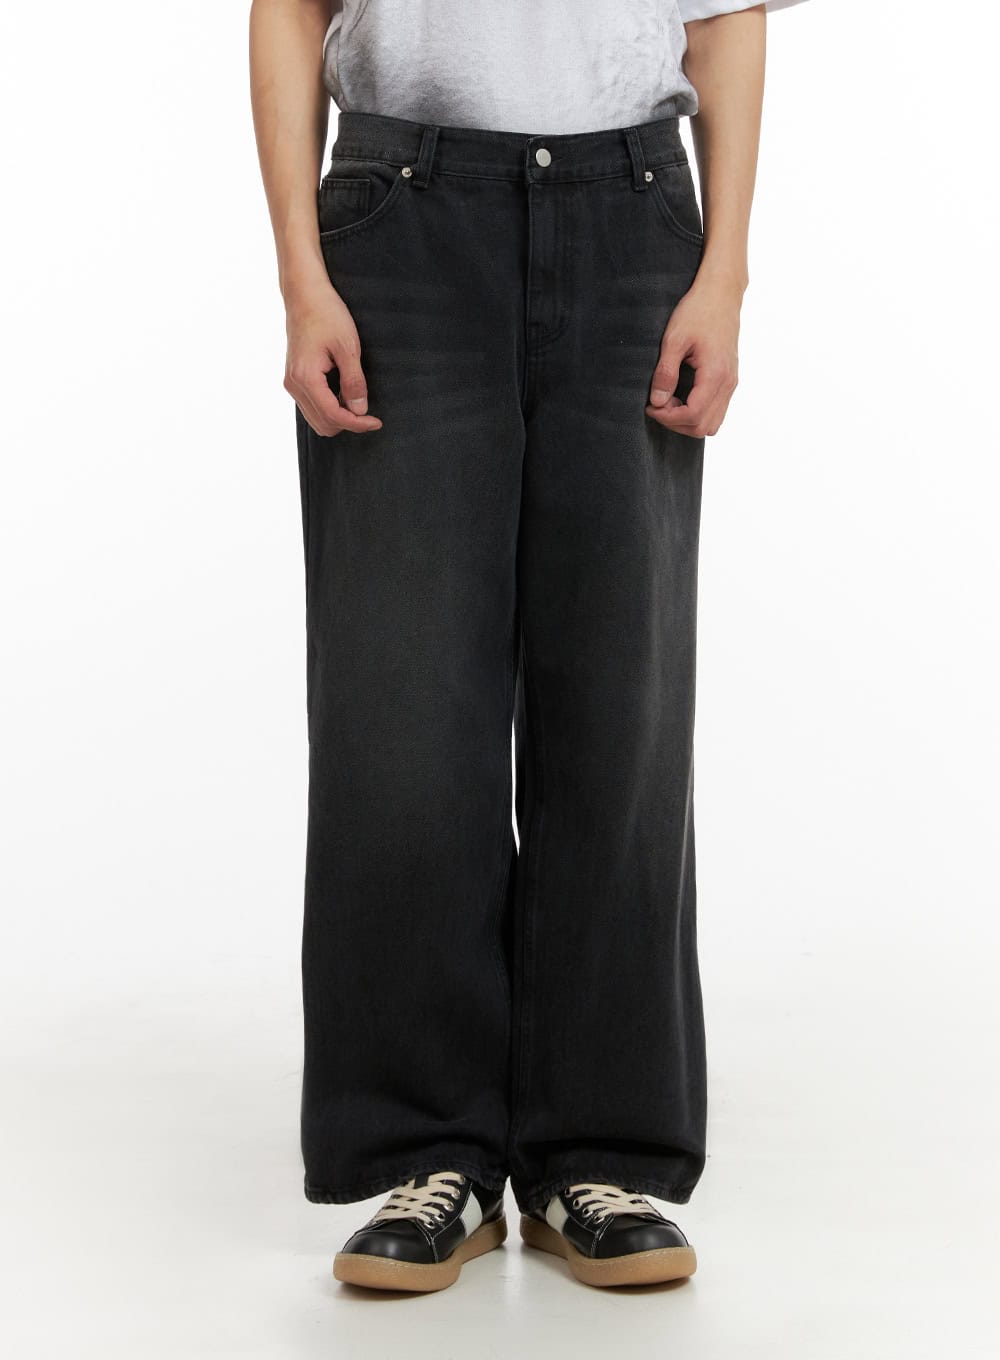 mens-wide-leg-baggy-jeans-iy410 / Black